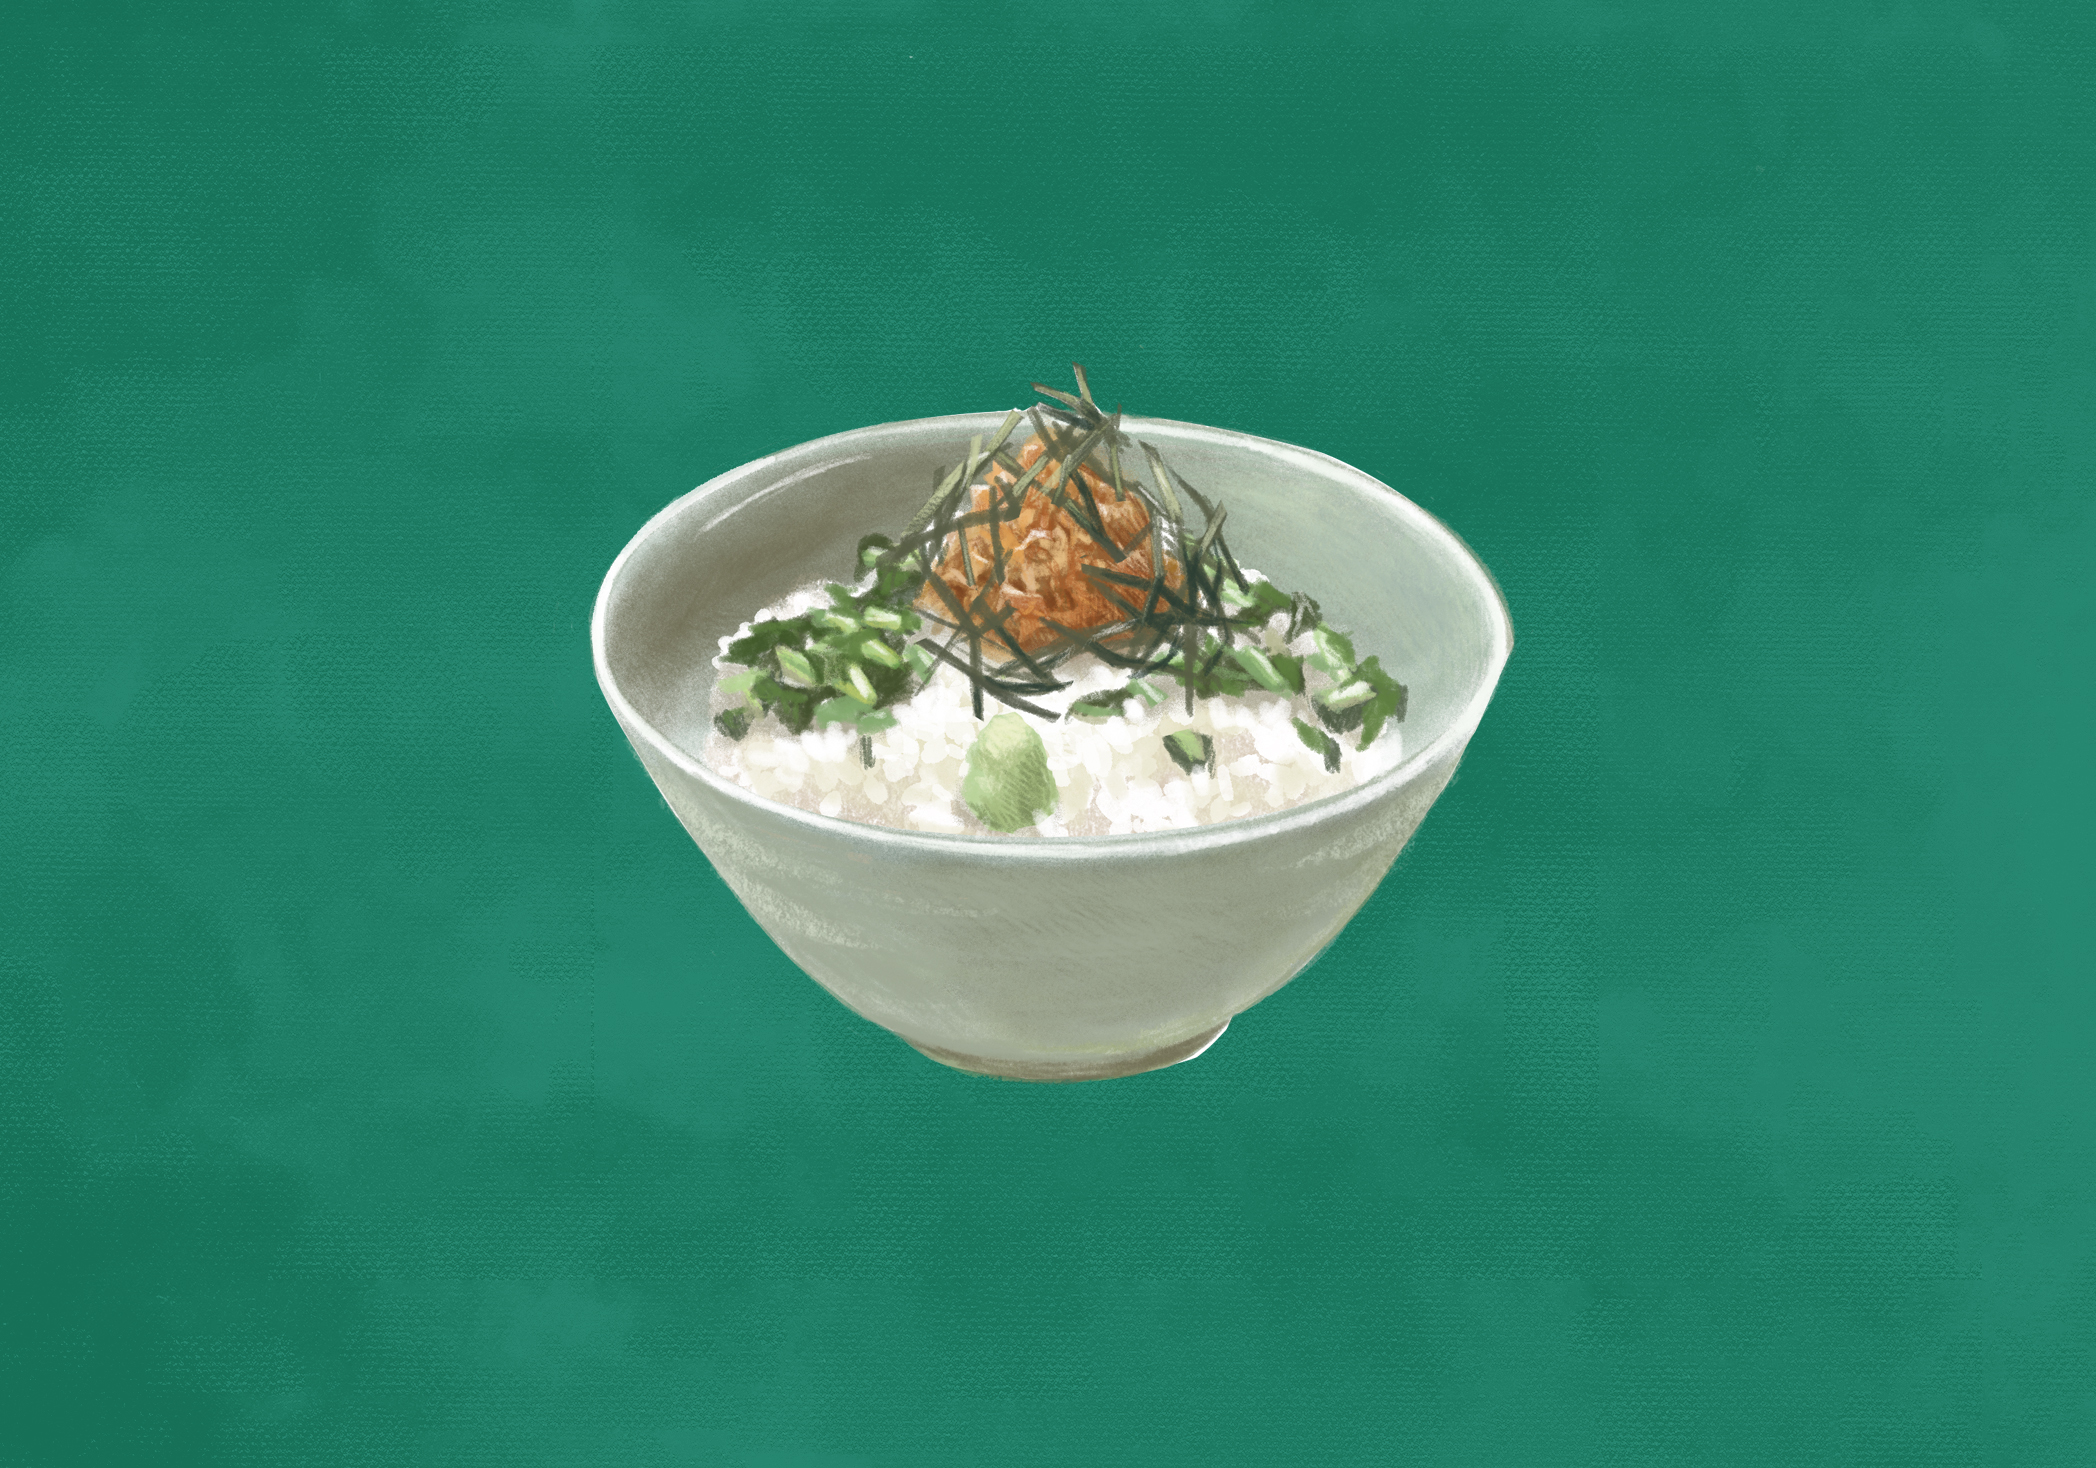 HACHIYOSHI / illustrator<br />
Create food illustrations